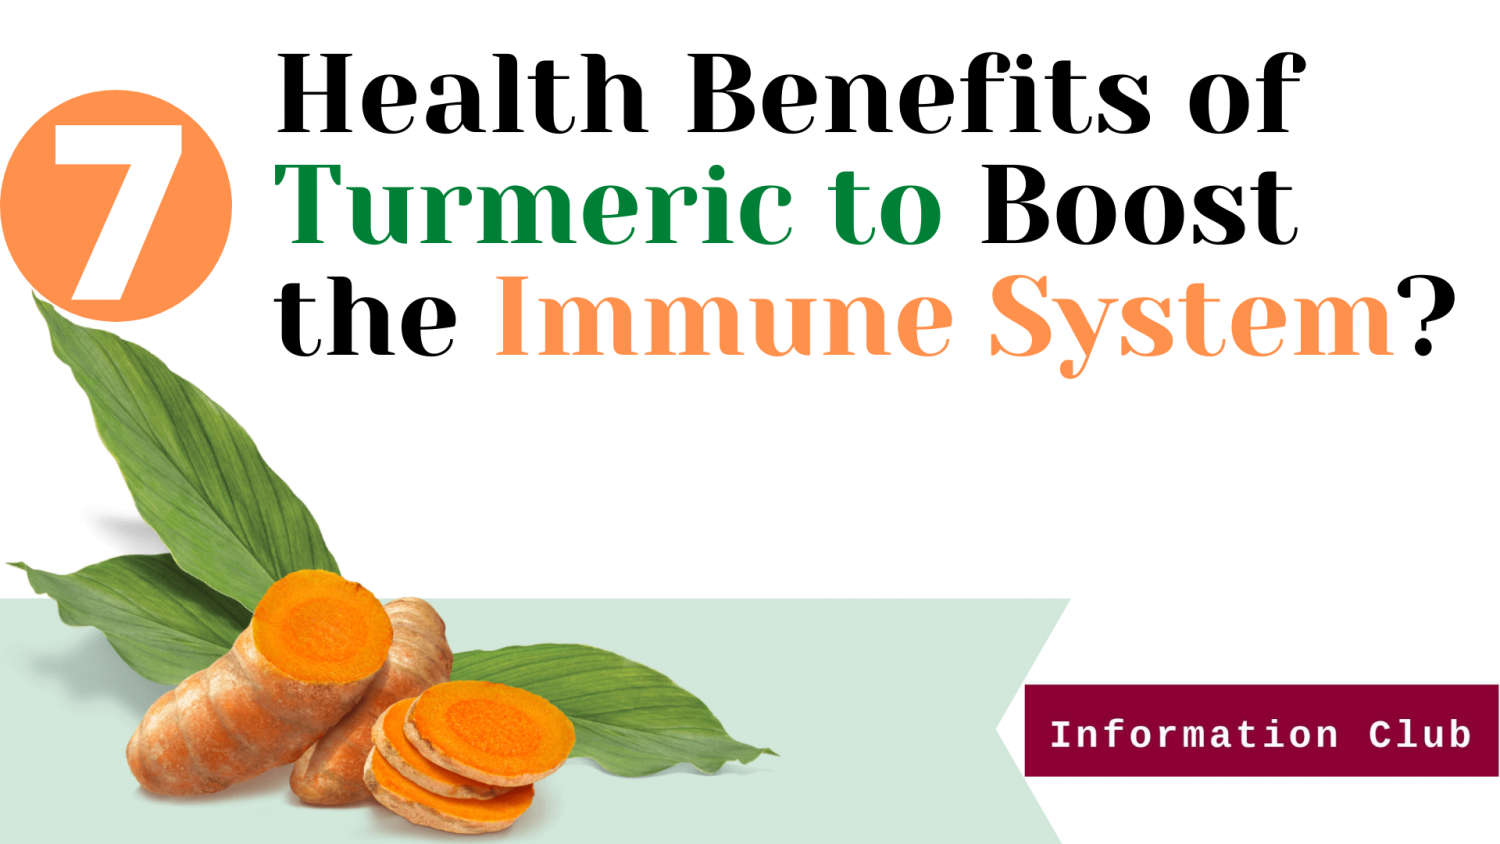 https://www.clubinfonline.com/2020/04/04/turmeric-an-immune-booster-herbal-health-benefits-of-turmeric/